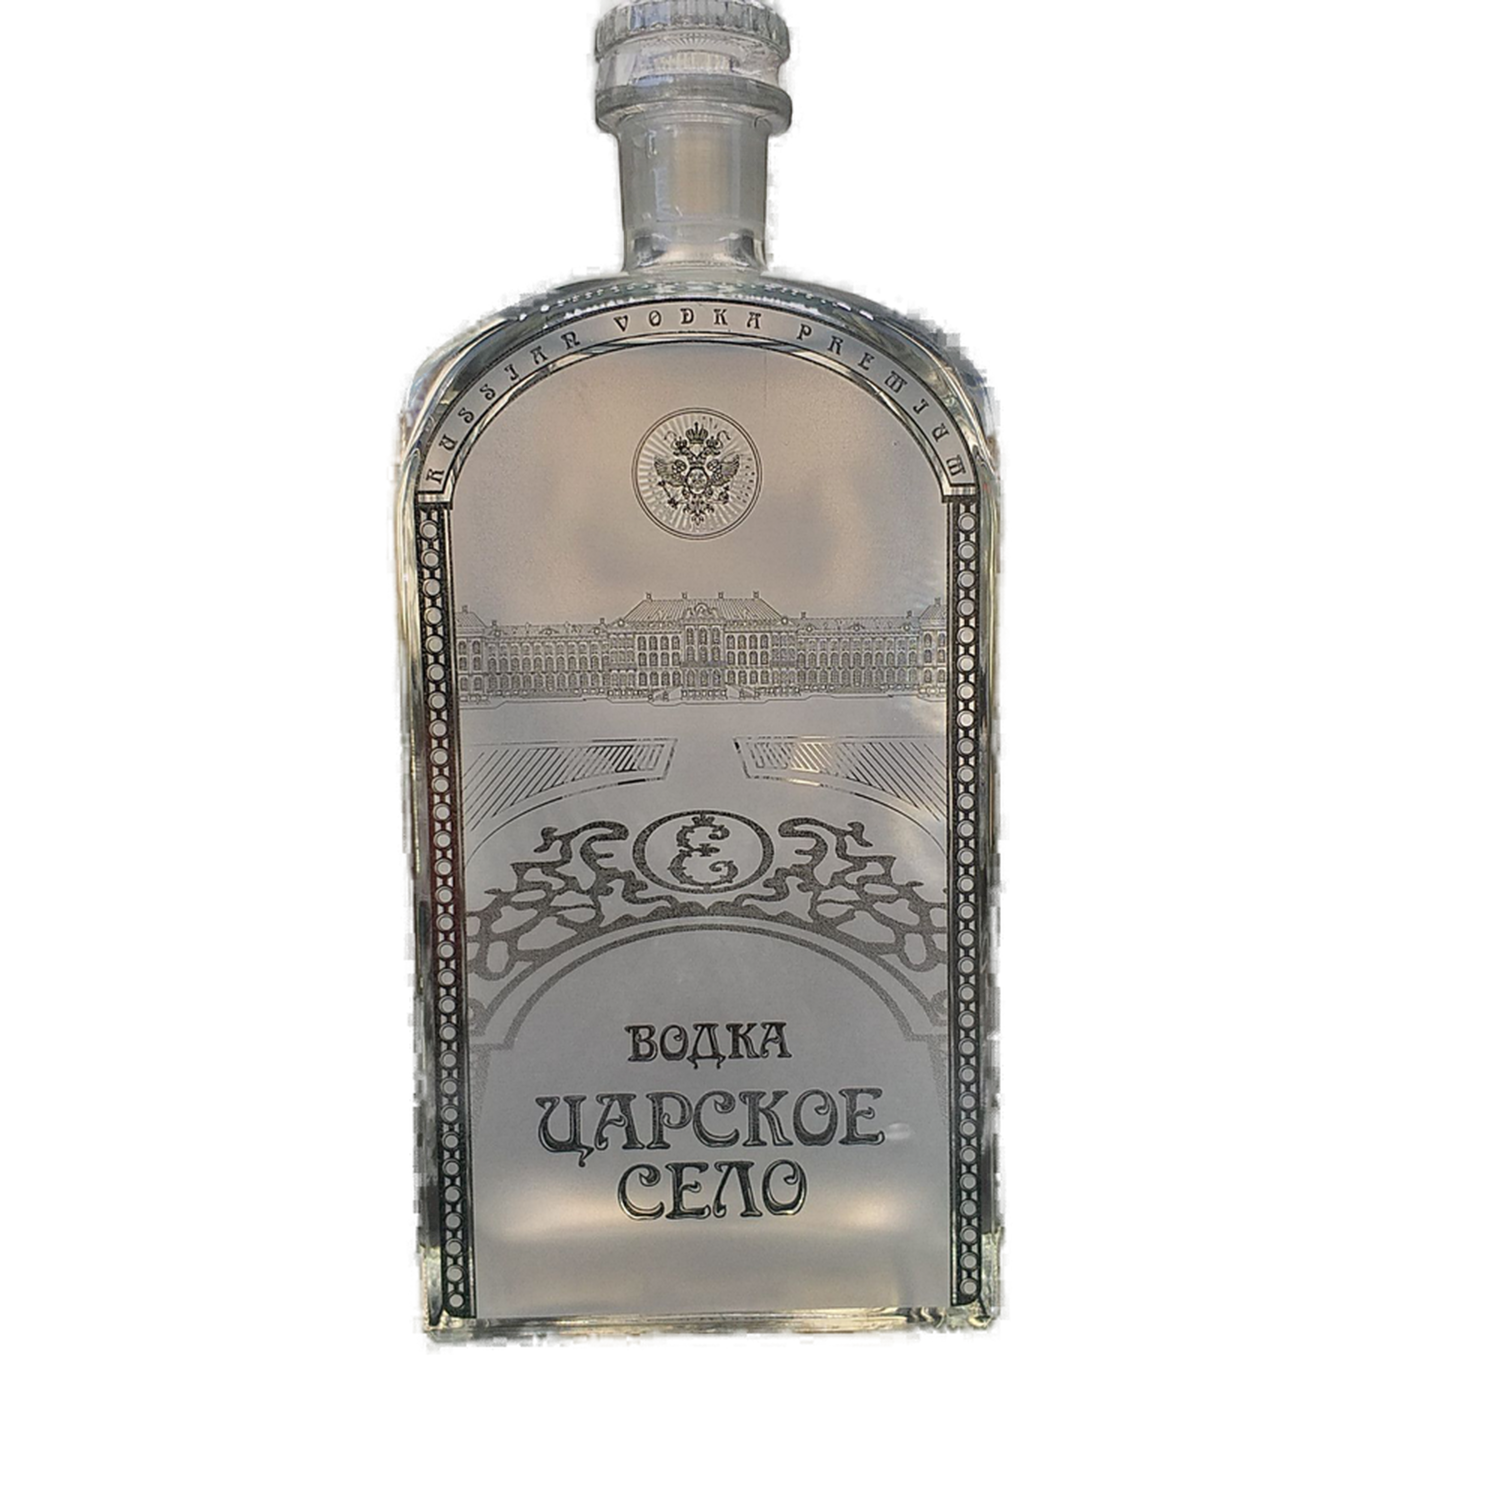 Boaka Uapckoe Ultra Premium Vodka 40% VOL. (1x0,7ltr.)